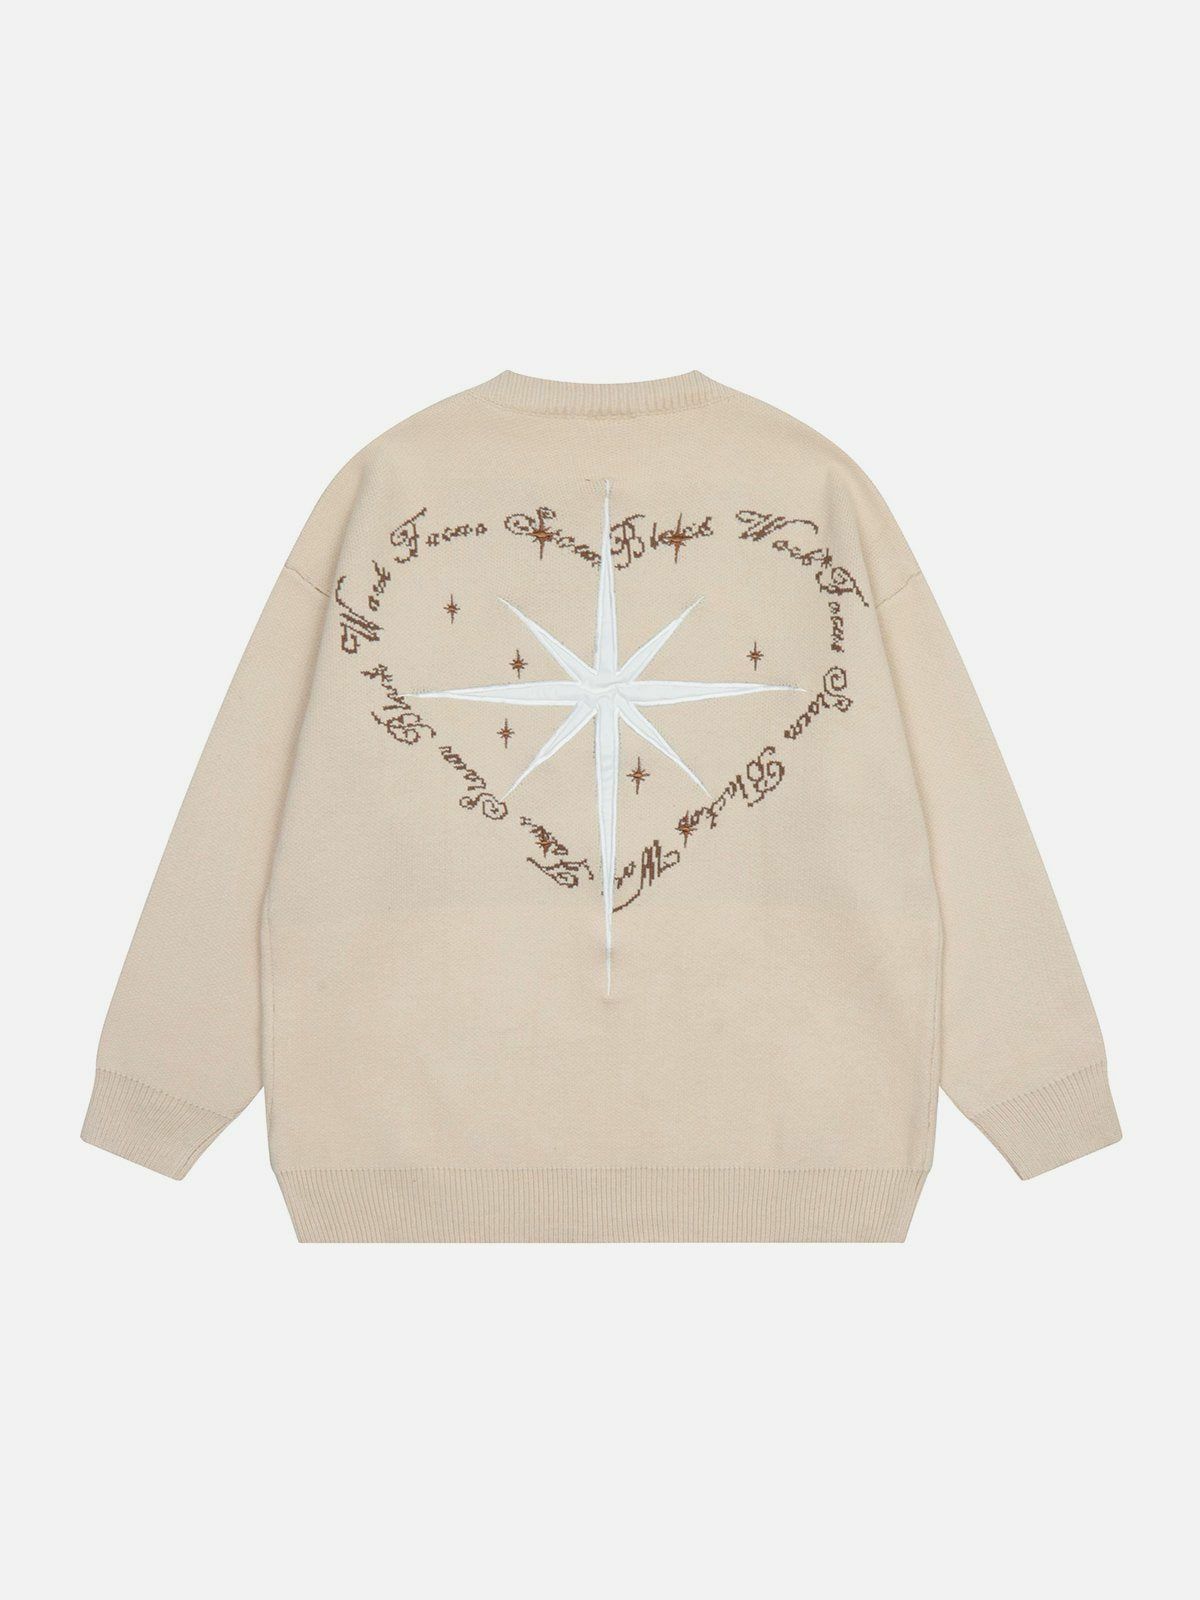 retro jacquard sweater star heart letter design 5956